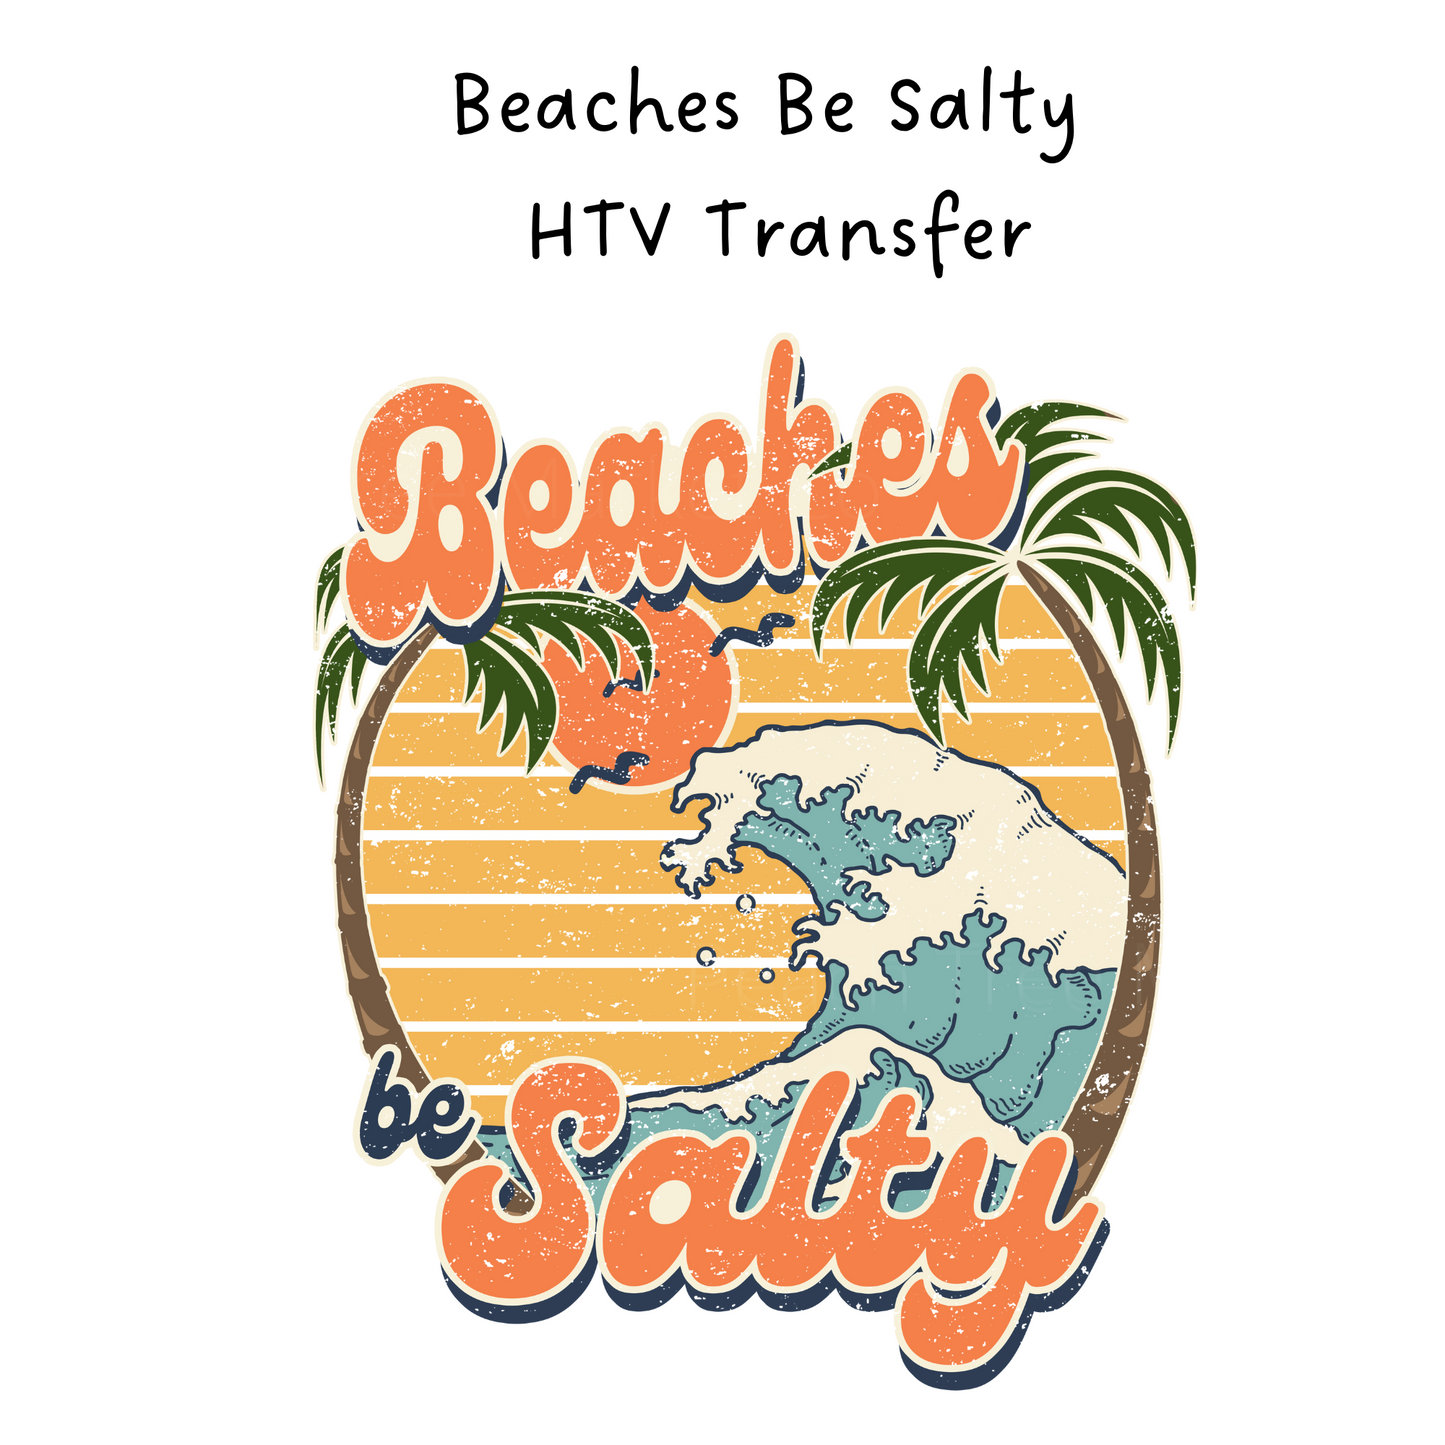 Beaches Be Salty HTV Transfer